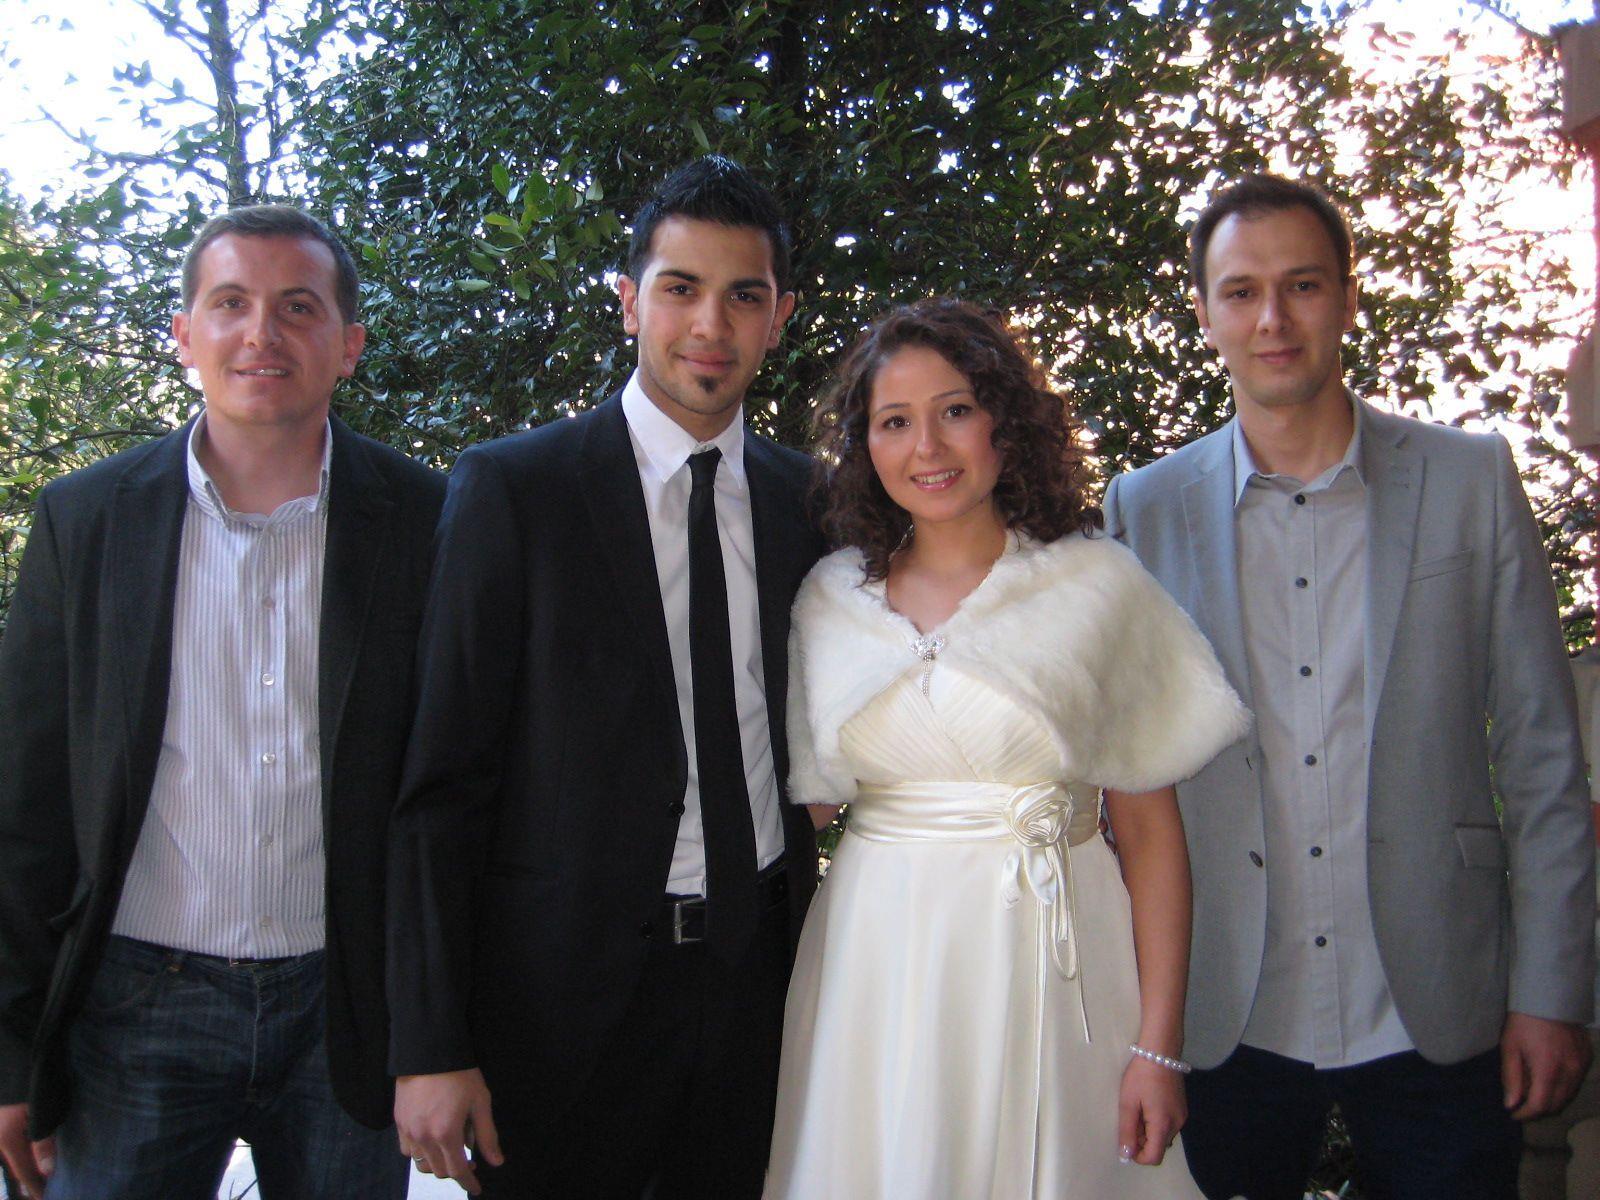 Hülya Öztürk und Cihan Karakoc haben geheiratet.